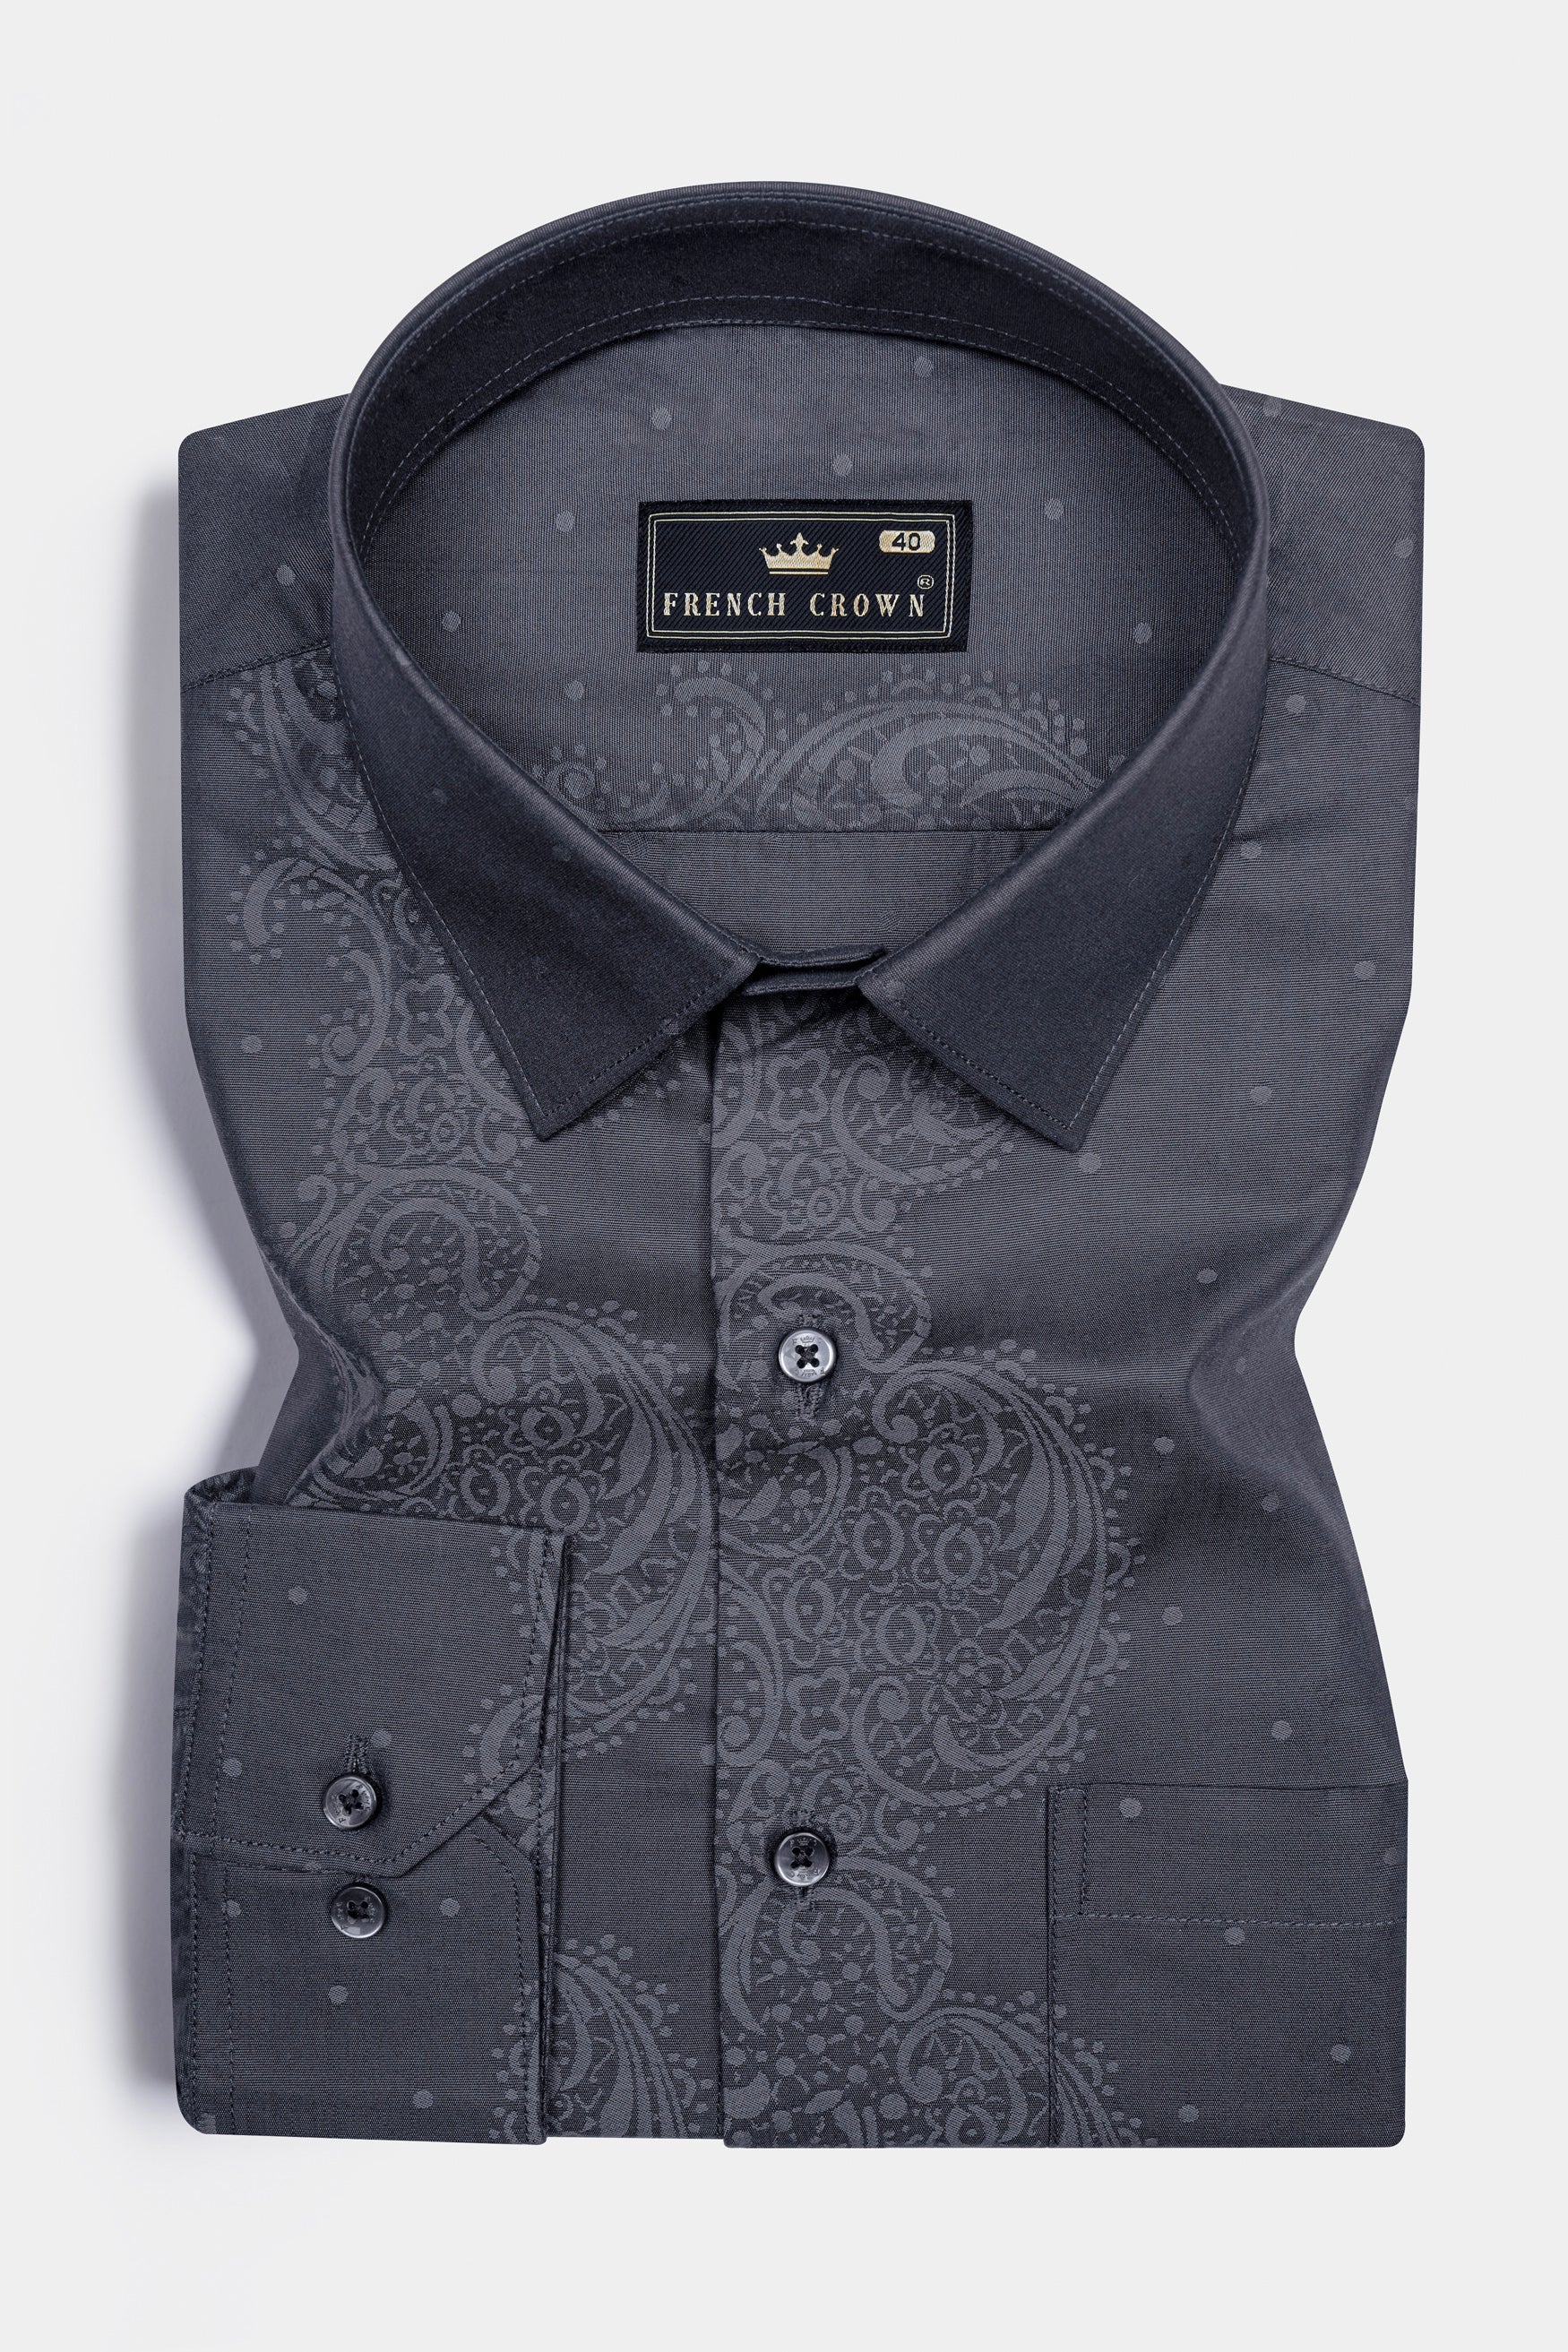 Trout Black Paisley Jacquard Textured Premium Giza Cotton Shirt